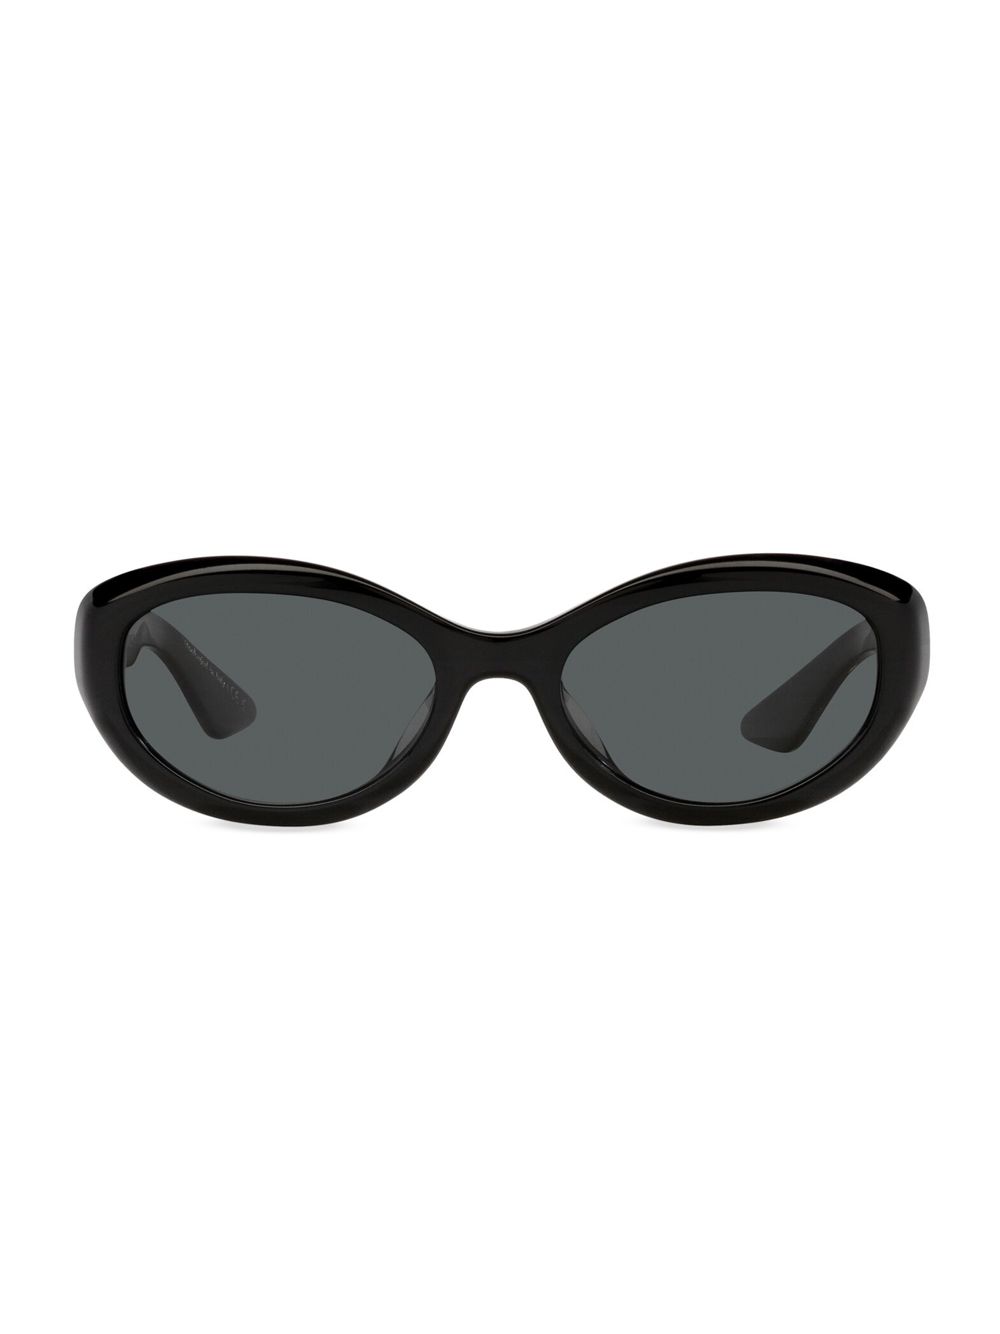 Овальные солнцезащитные очки Oliver Peoples 53MM KHAITE x Oliver Peoples, черный квадратные солнцезащитные очки oliver sun 51 мм oliver peoples